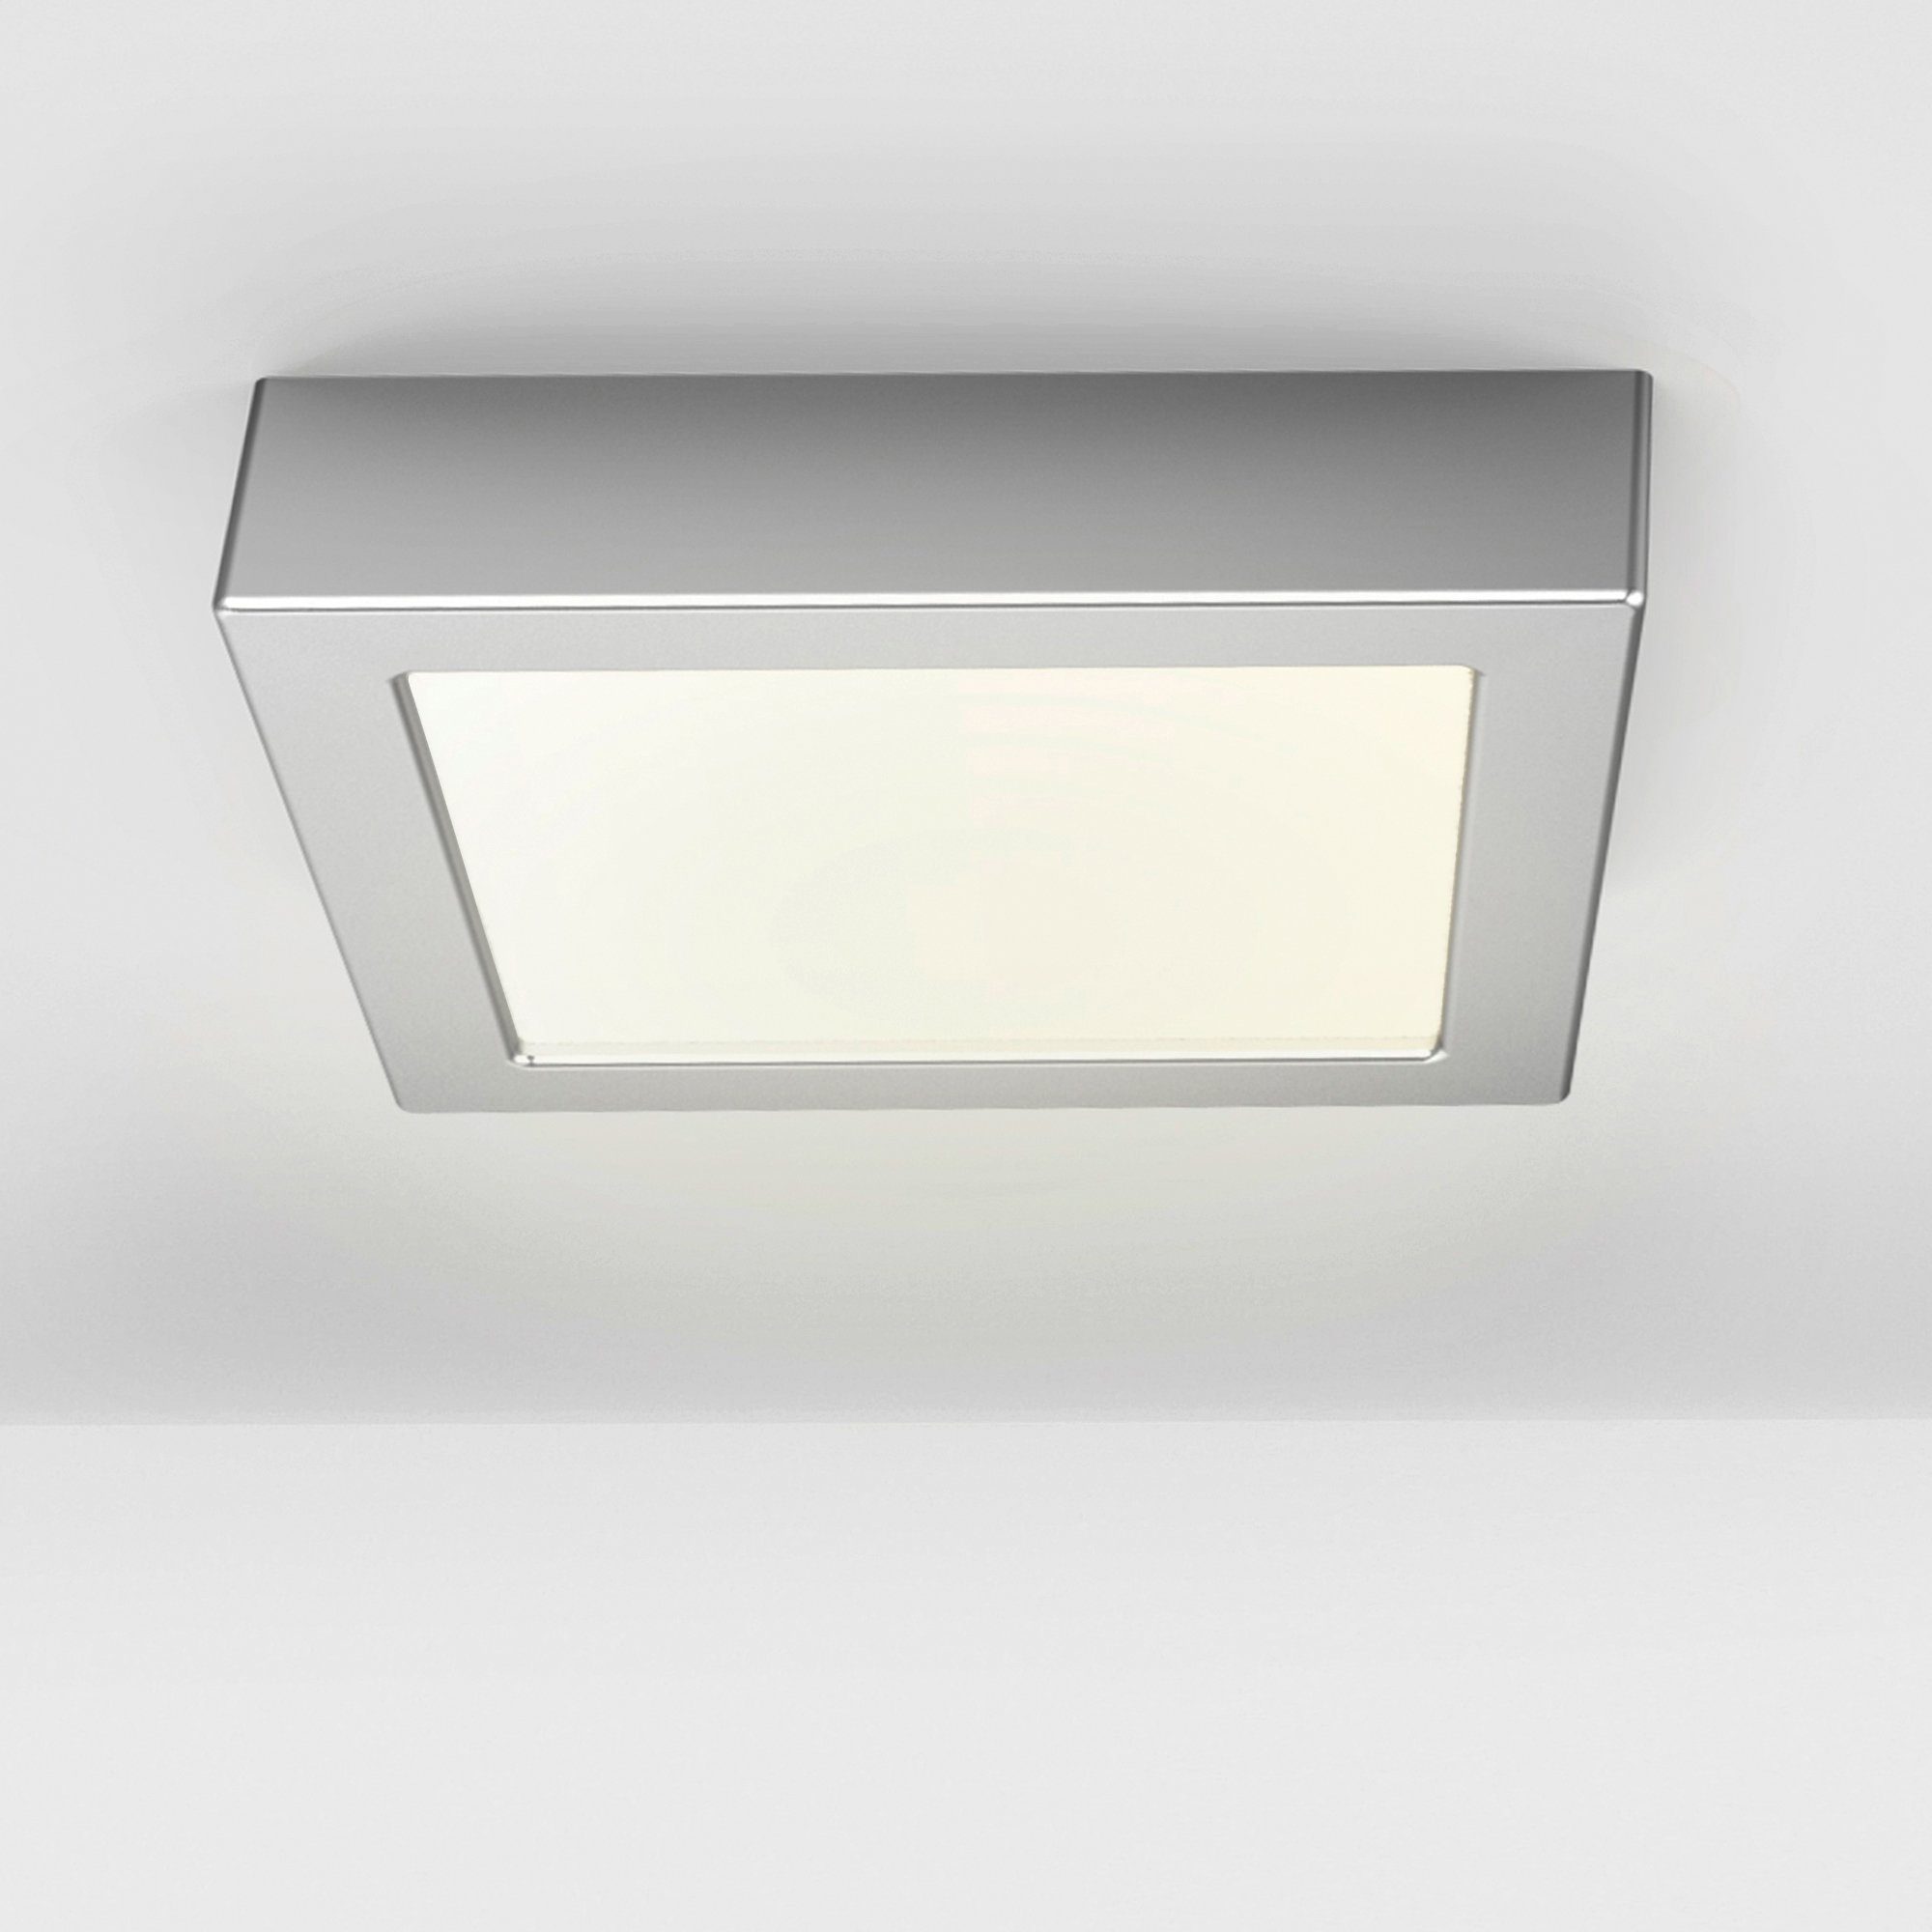 B.K.Licht LED Aufbaustrahler Garnet, LED fest integriert, Warmweiß, LED Unterbauleuchte Panel 12W Aufbauleuchte Lampe Aufputzspot